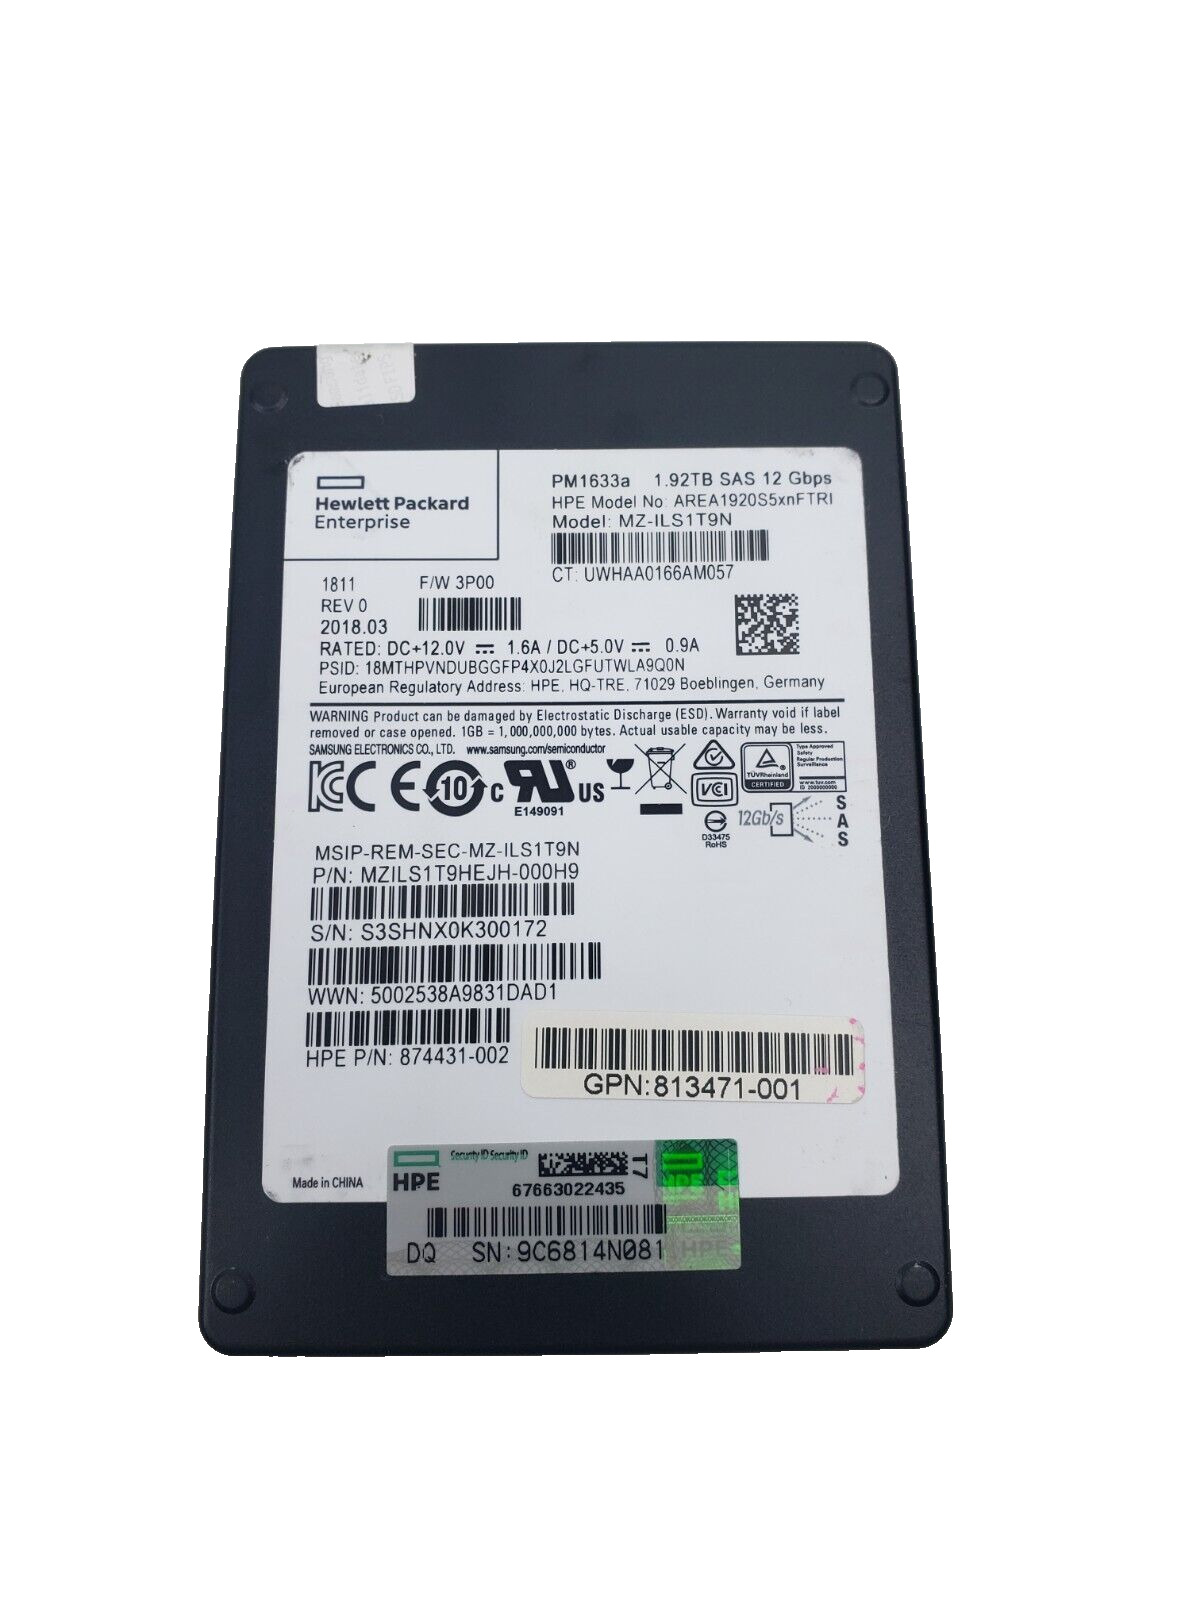 HPE mz-ils1t9n 1.92TB SAS 12GBps SSD PM1633a 874431-002